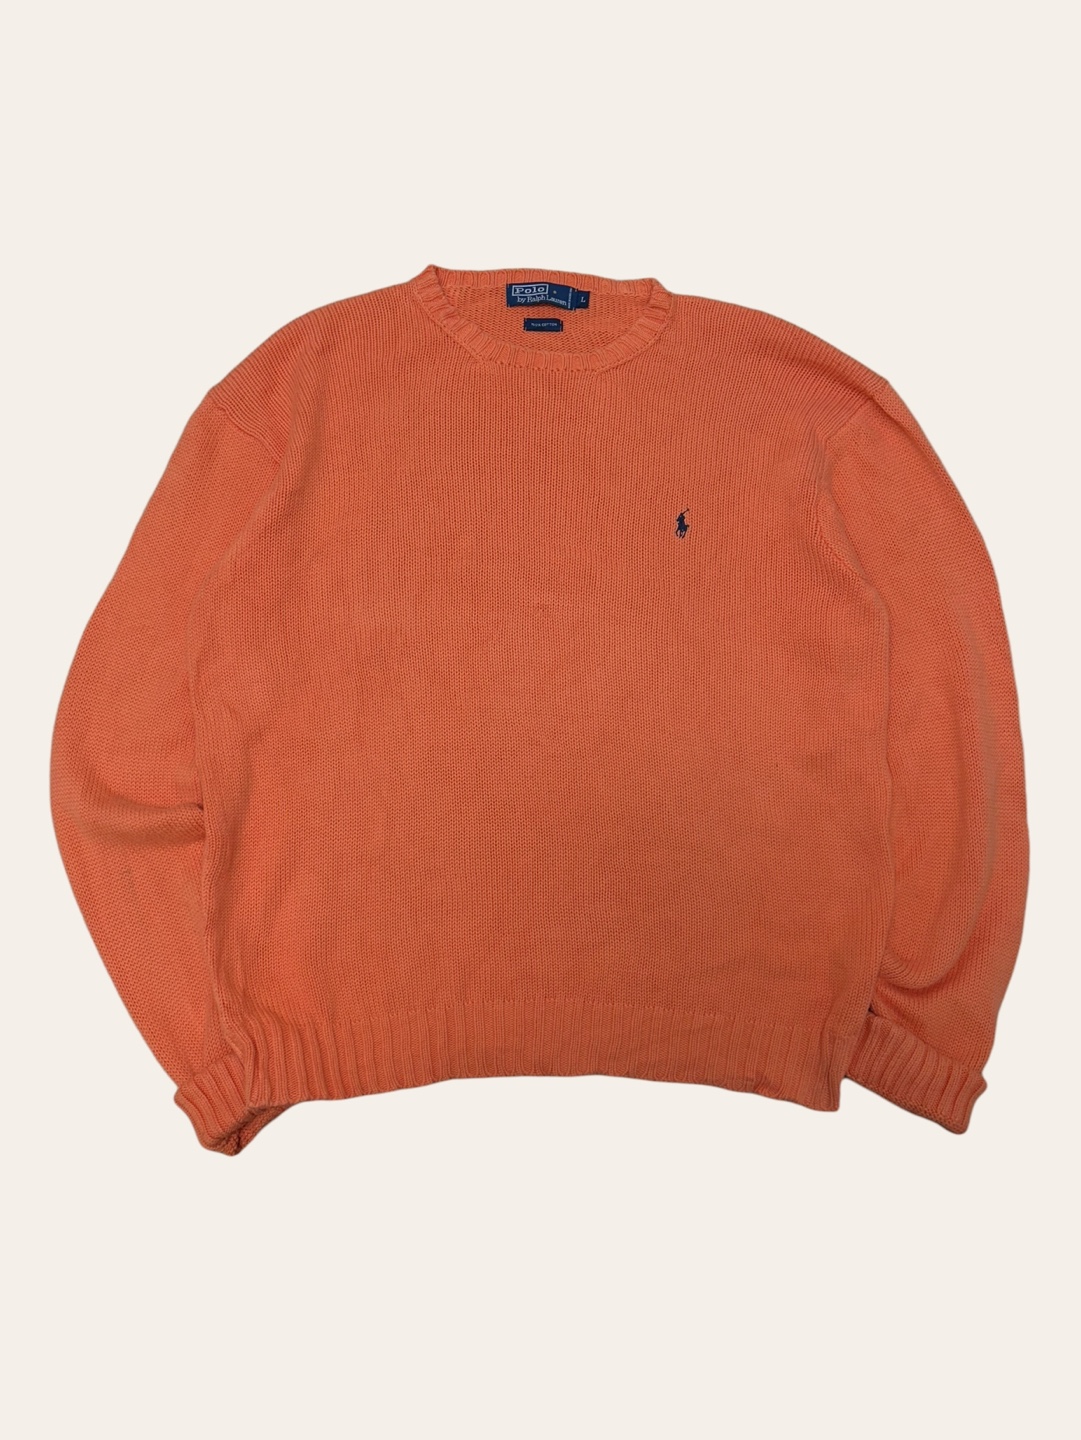 (From USA)Polo ralph lauren orange cotton crewneck sweater L